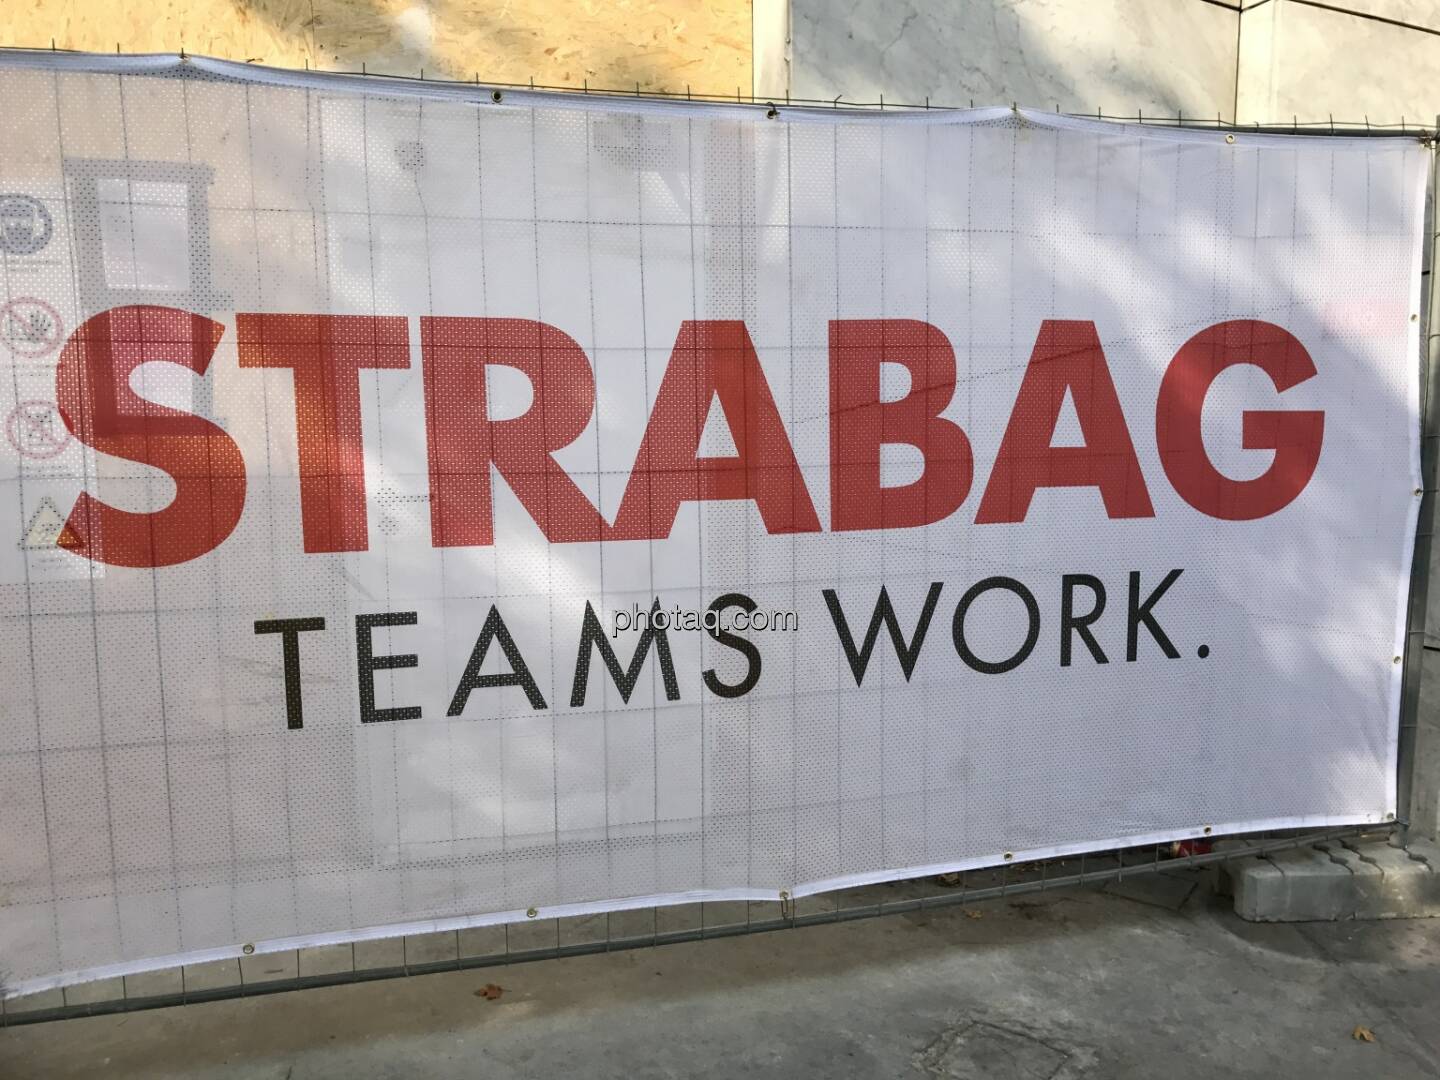 Strabag Teams Work, Baustelle, Zaun (Bild: Michael Plos)